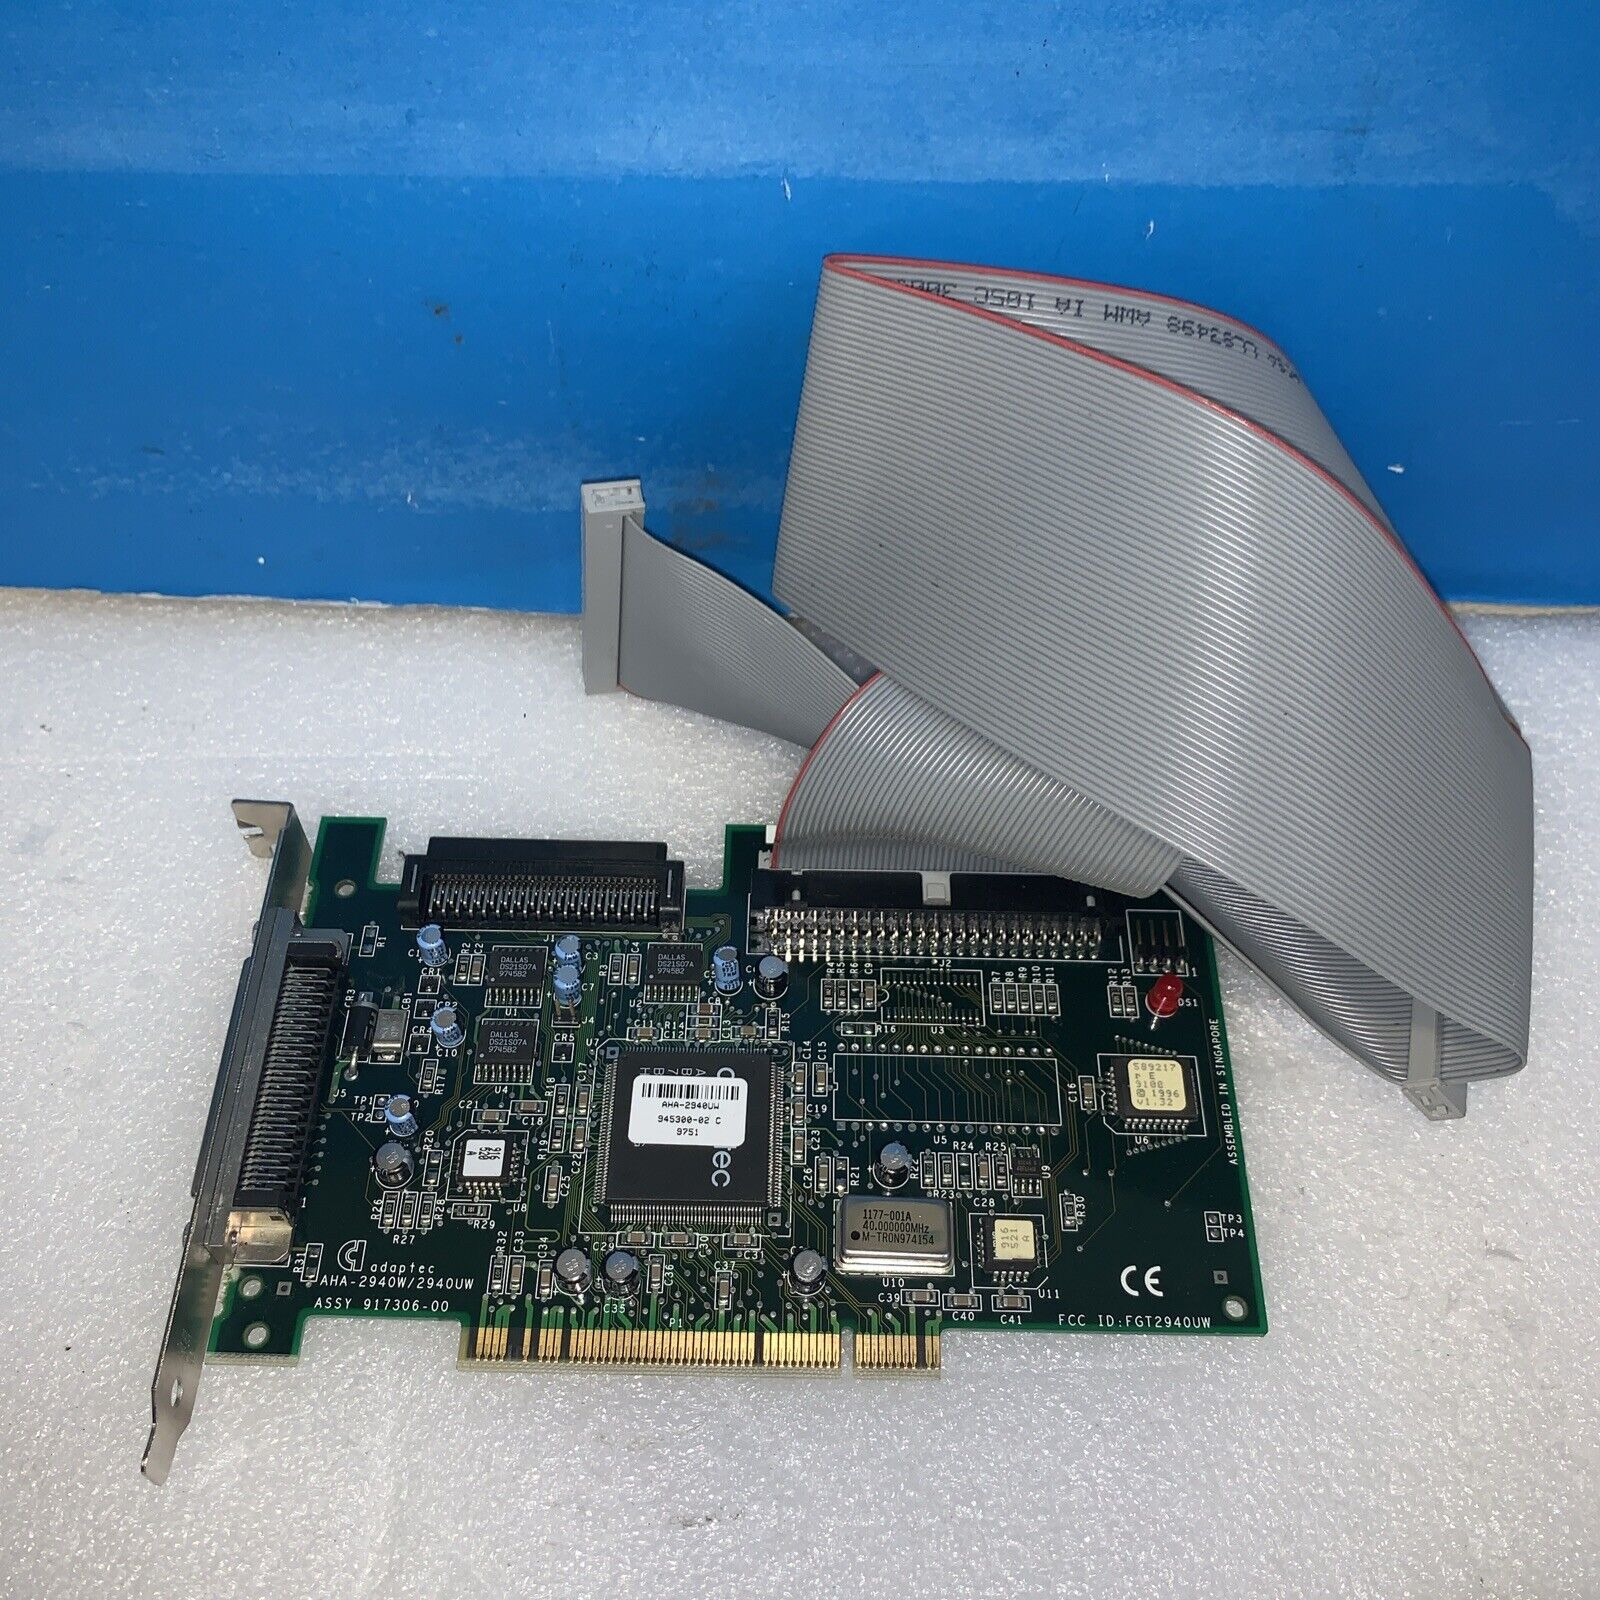 VINTAGE ADAPTEC AHA-2940W 2940UW ULTRA WIDE SCSI PCI CARD W/ UW SCSI CABLE